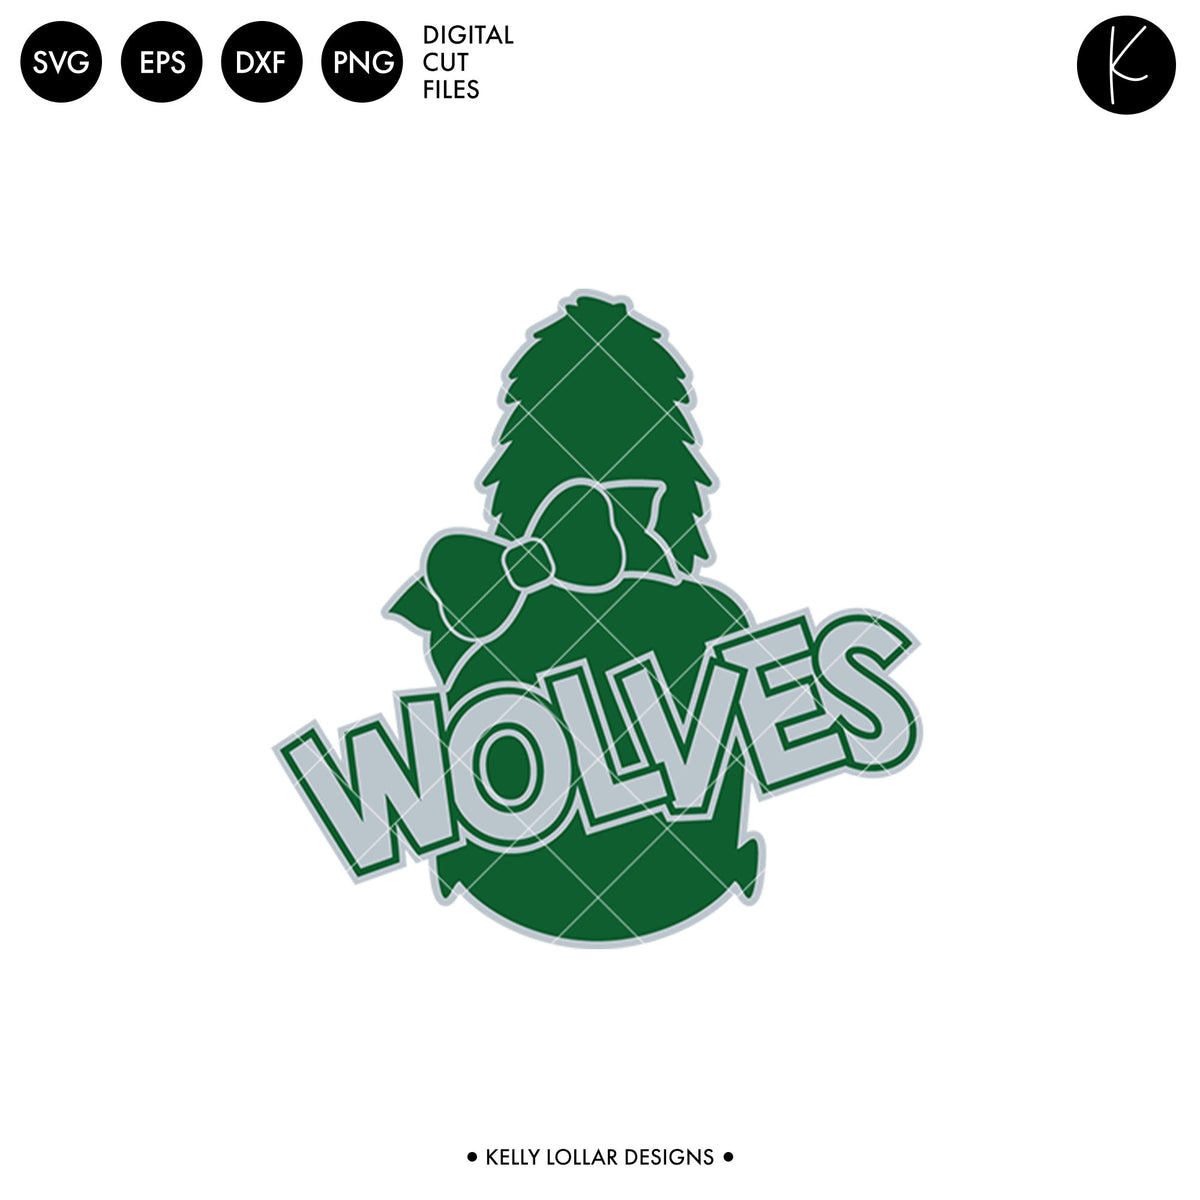 Wolves Band Bundle | SVG DXF EPS PNG Cut Files